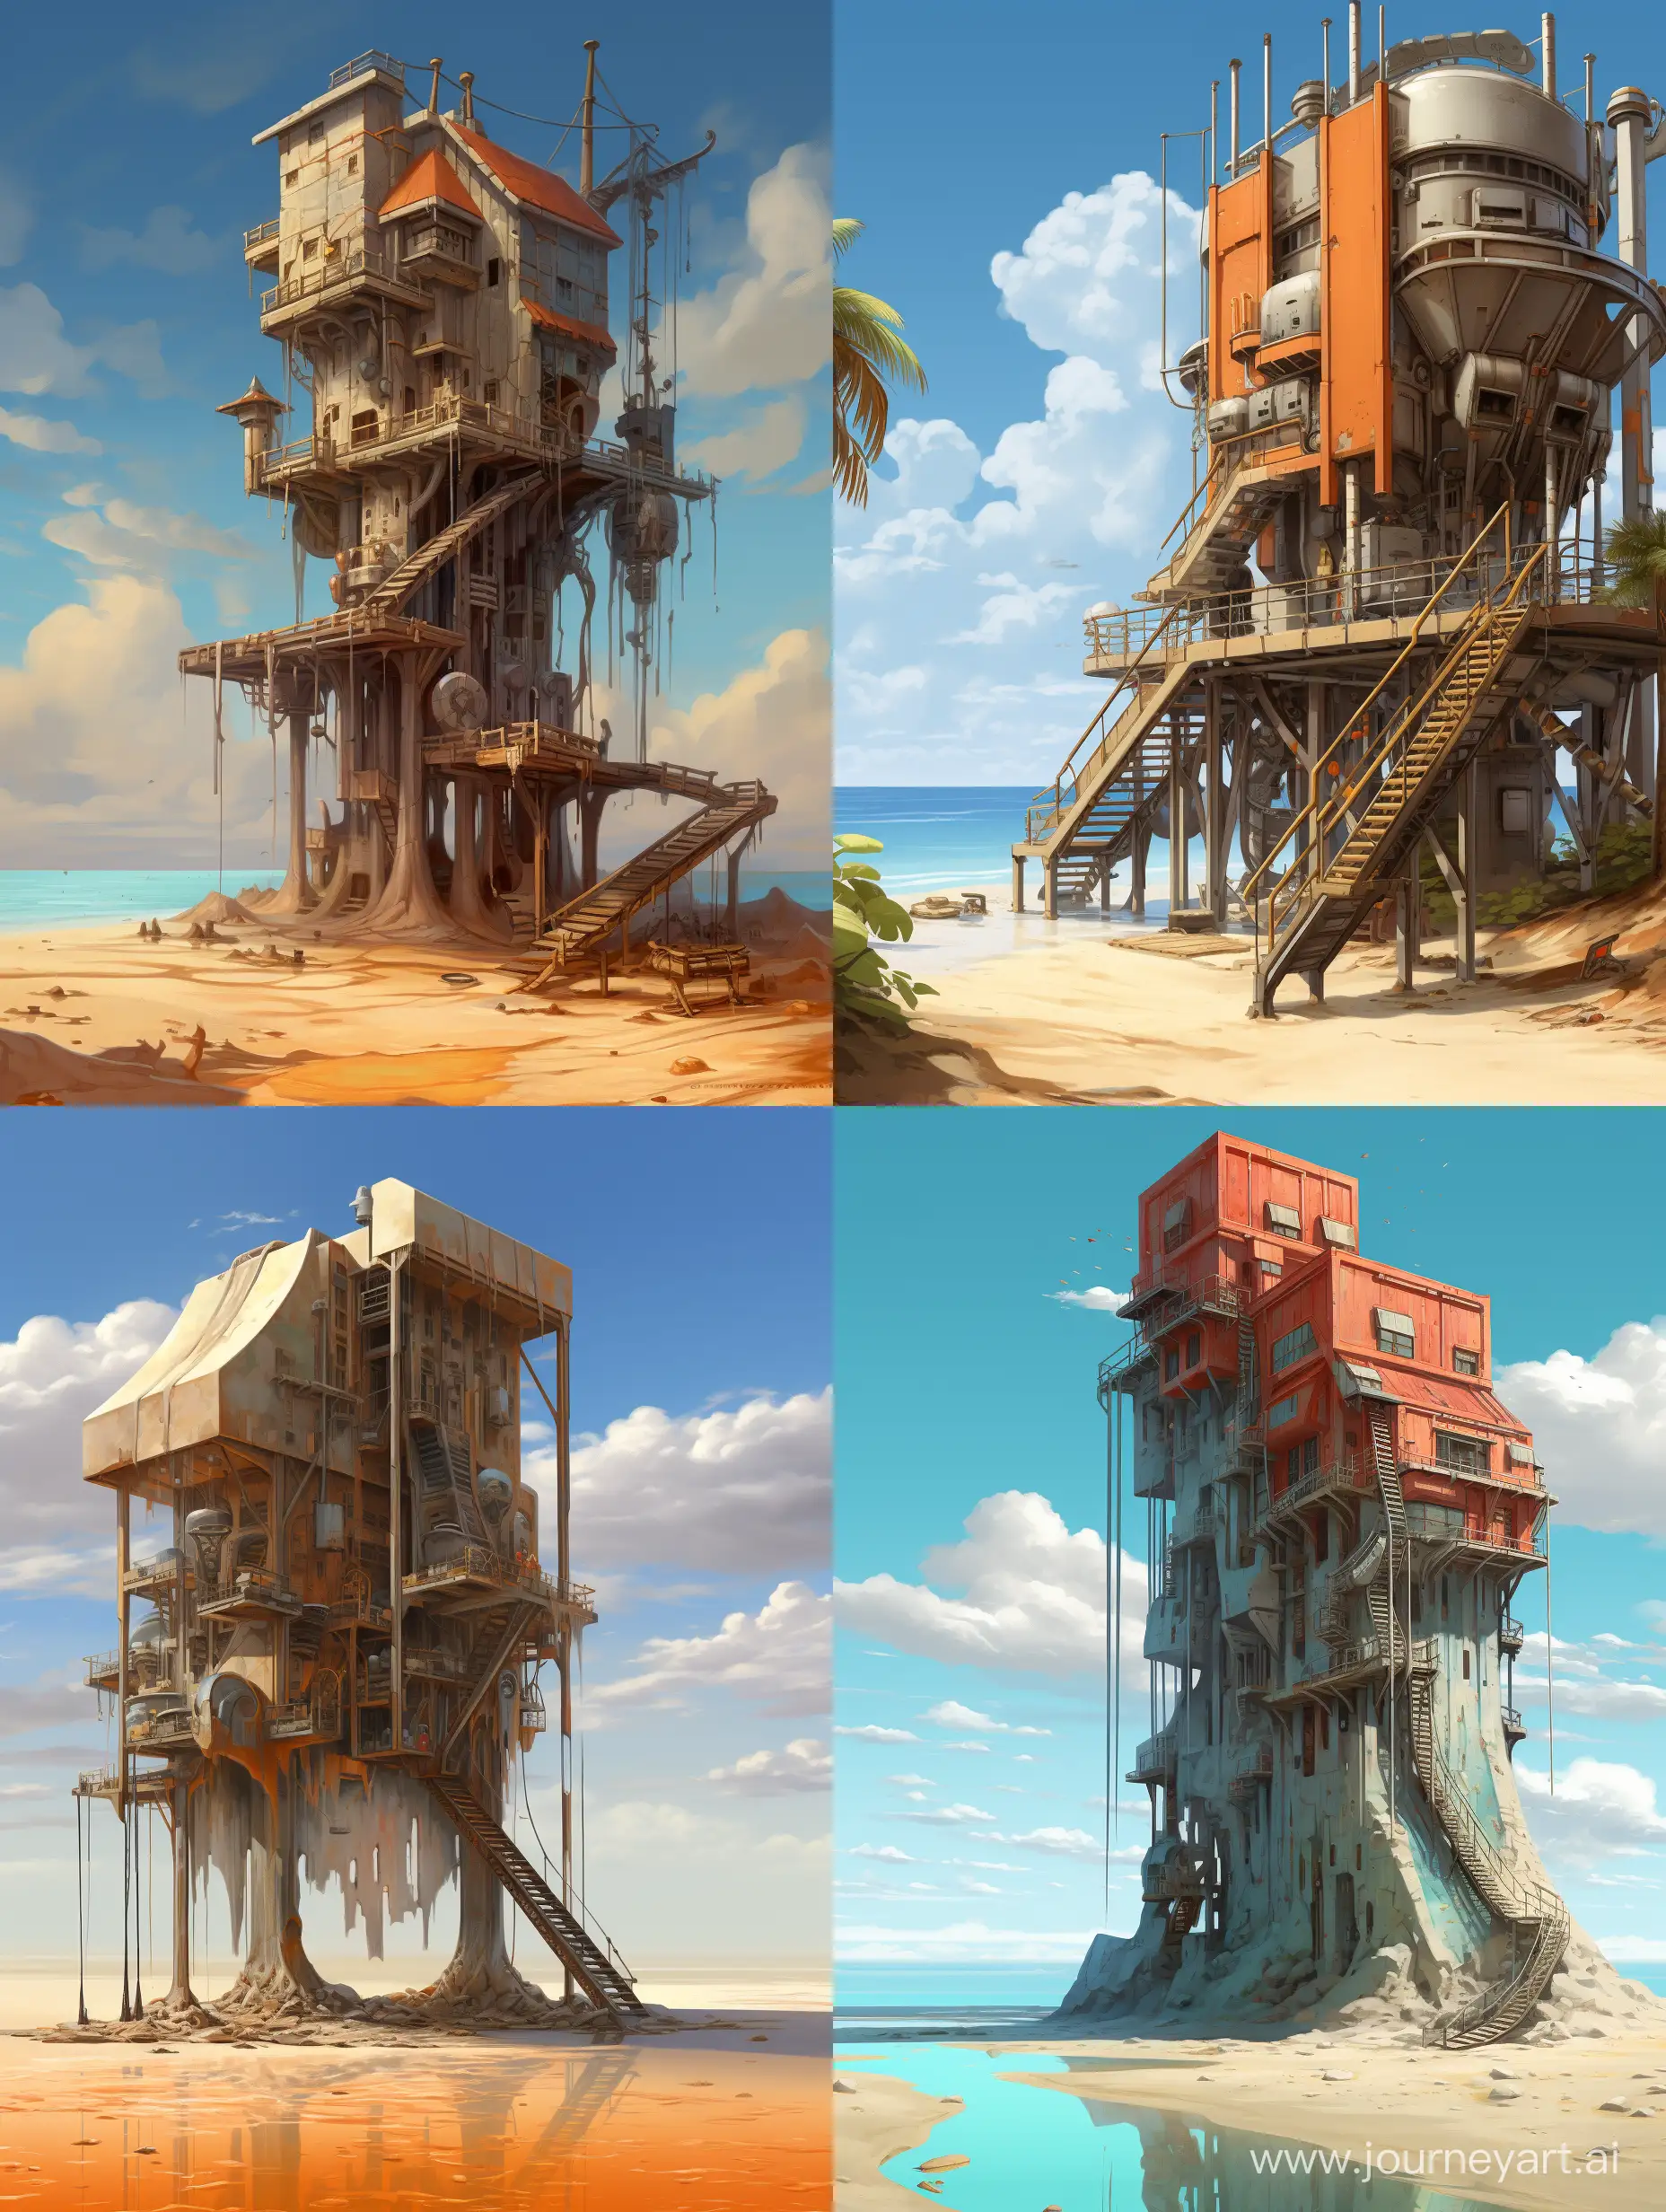 Futuristic-Bucket-Elevator-at-Work-on-the-Beach